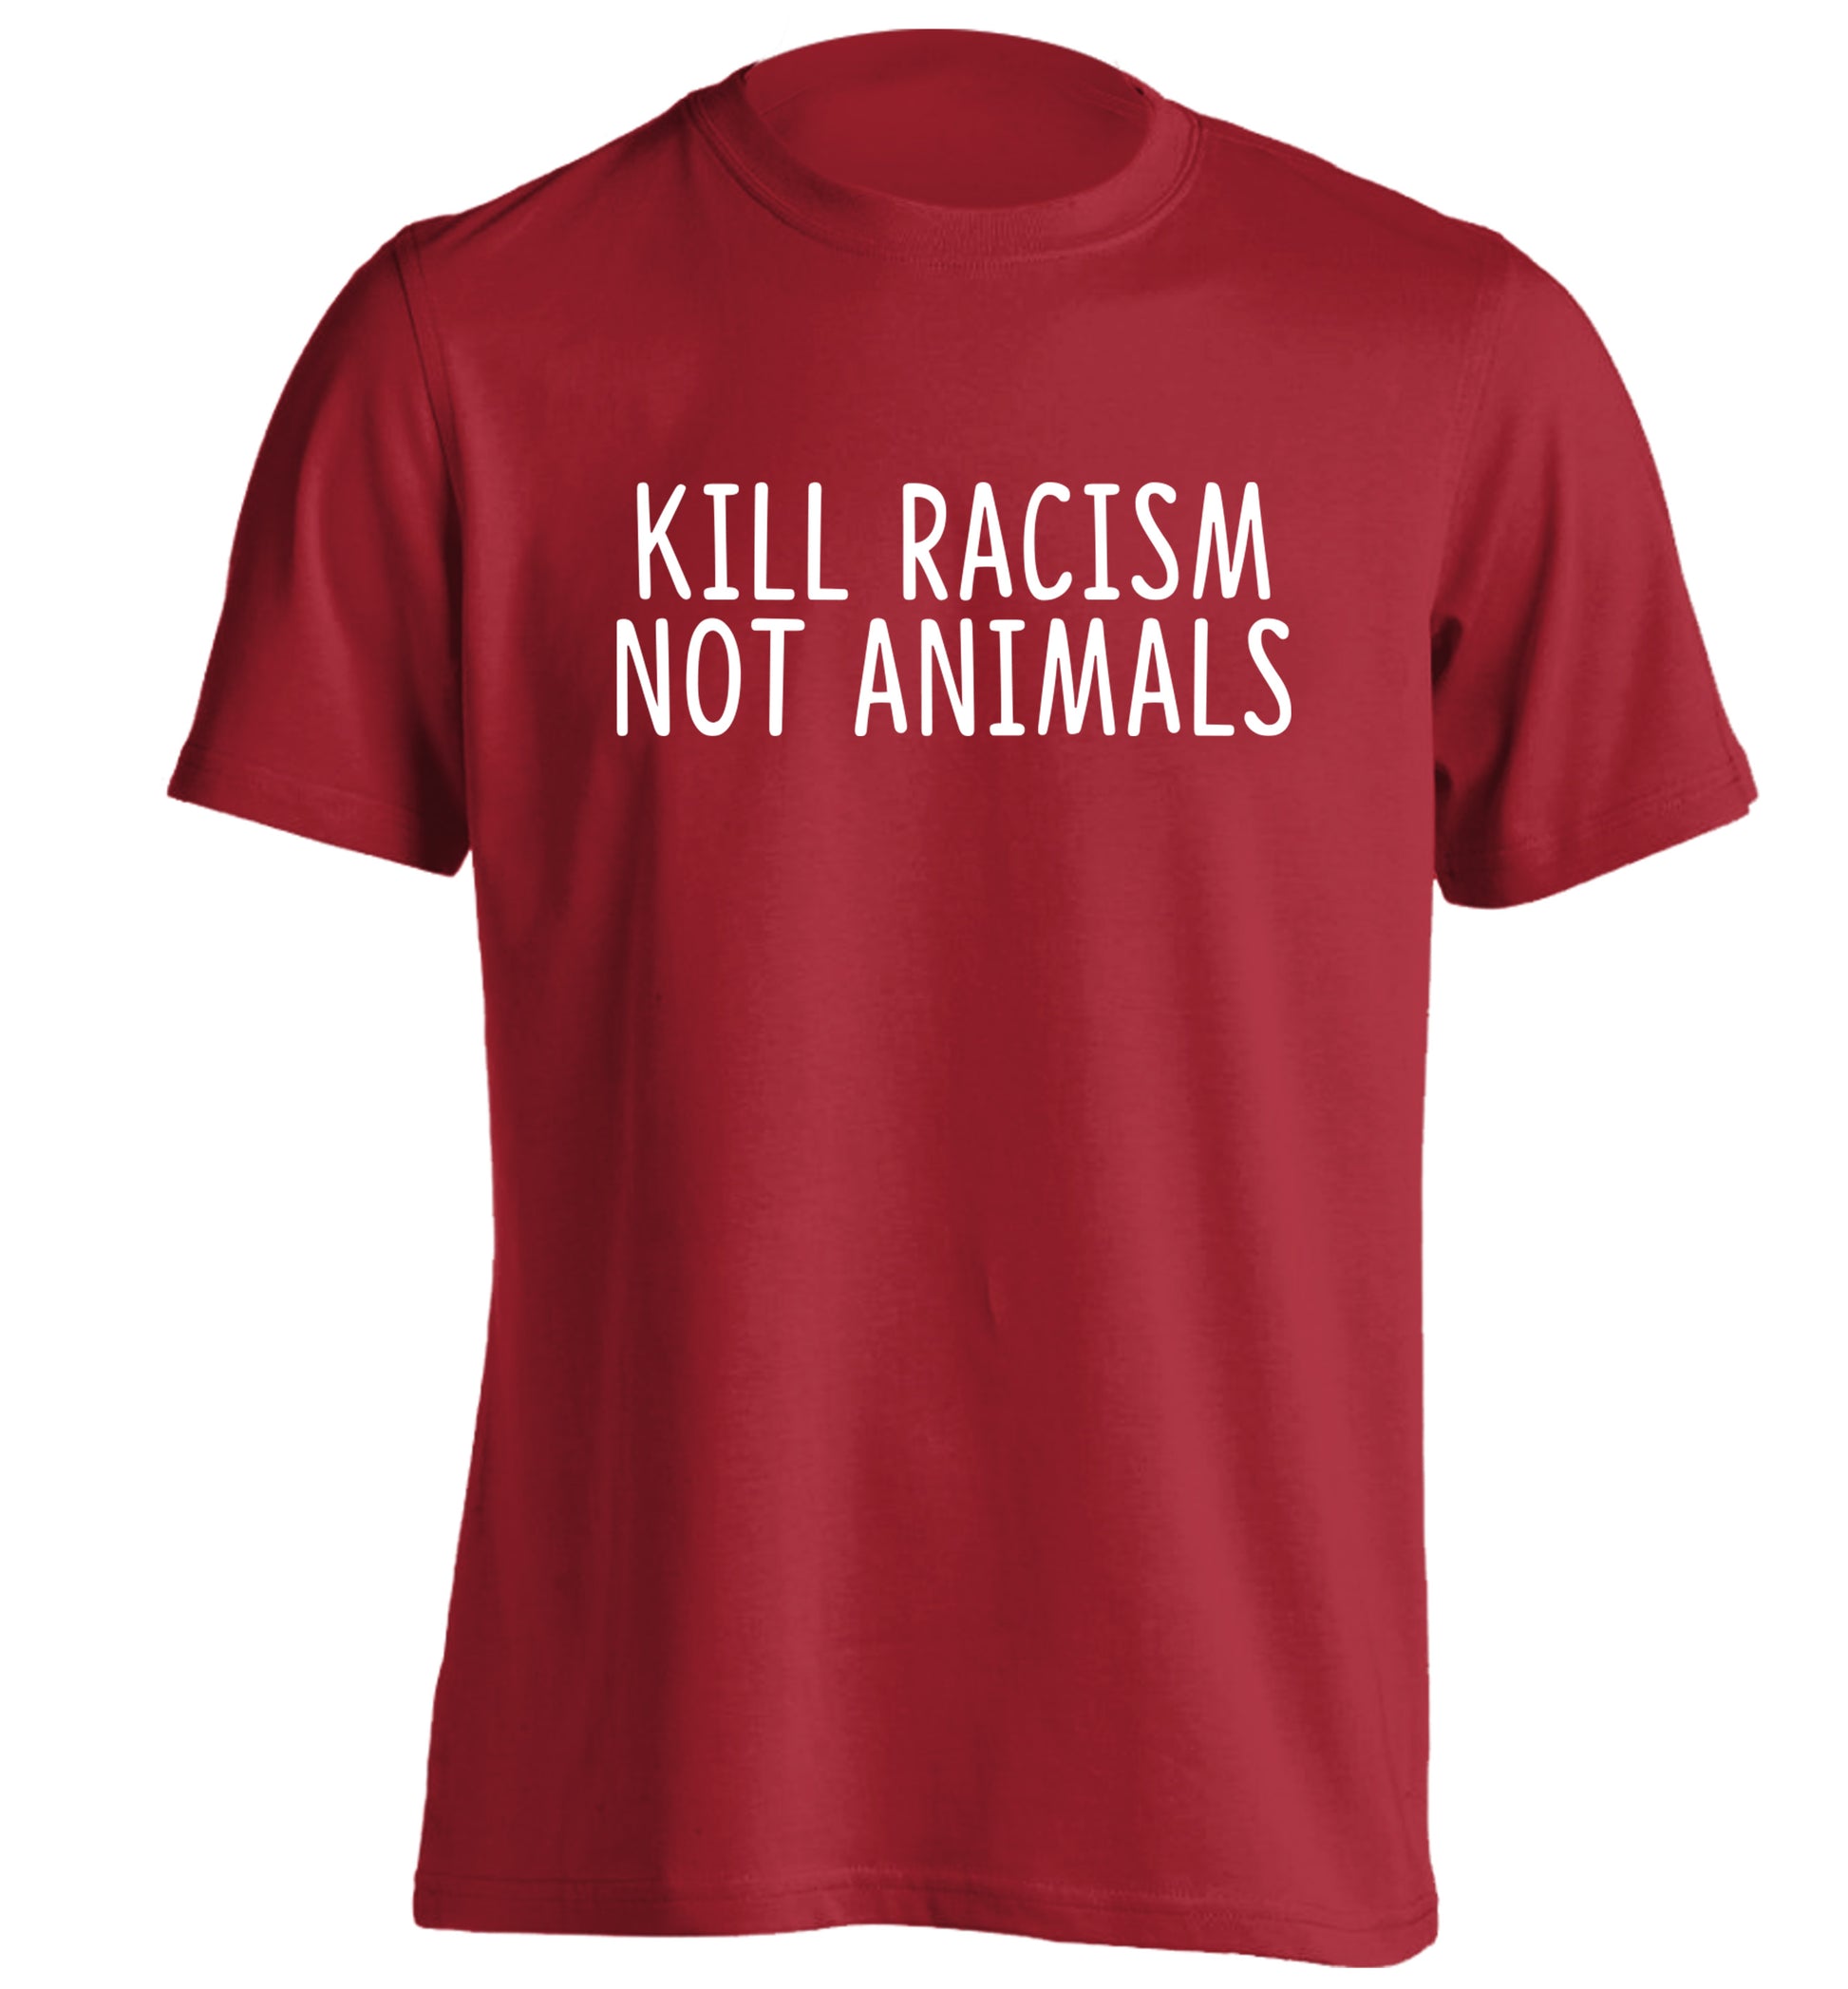 Kill Racism Not Animals adults unisex red Tshirt 2XL